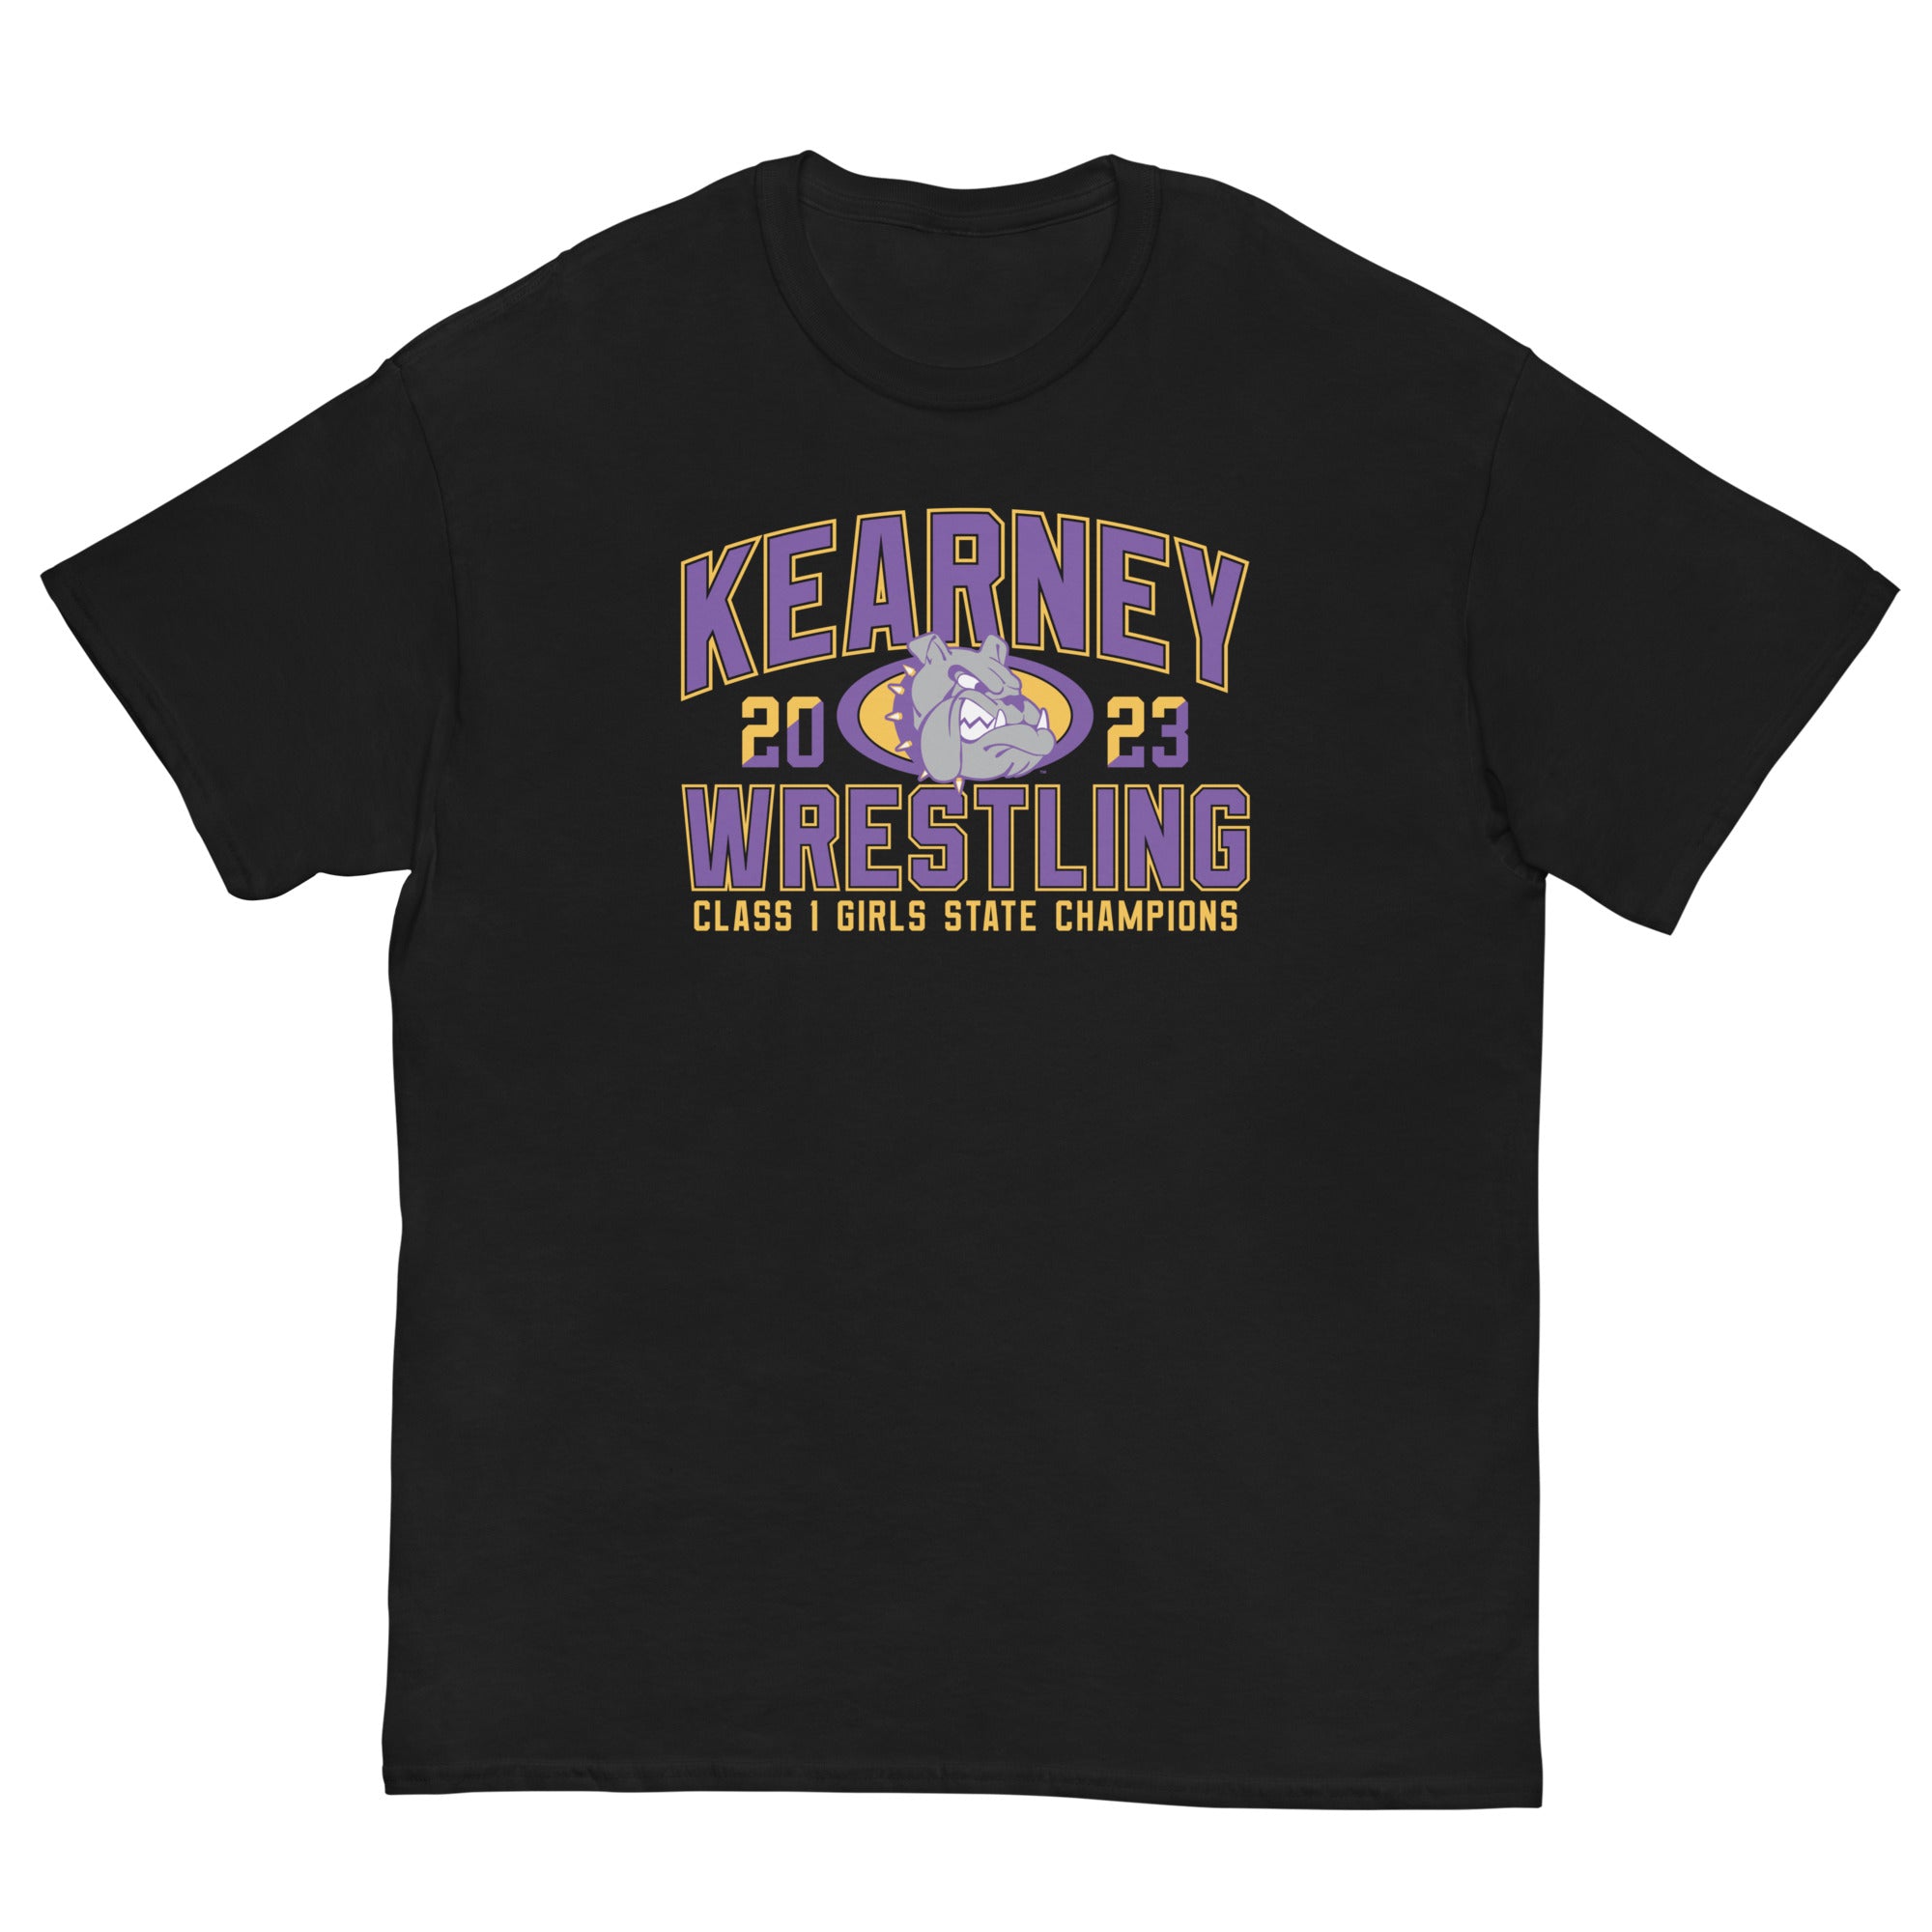 Kearney Wrestling Girls State Champs Black Mens Classic Tee